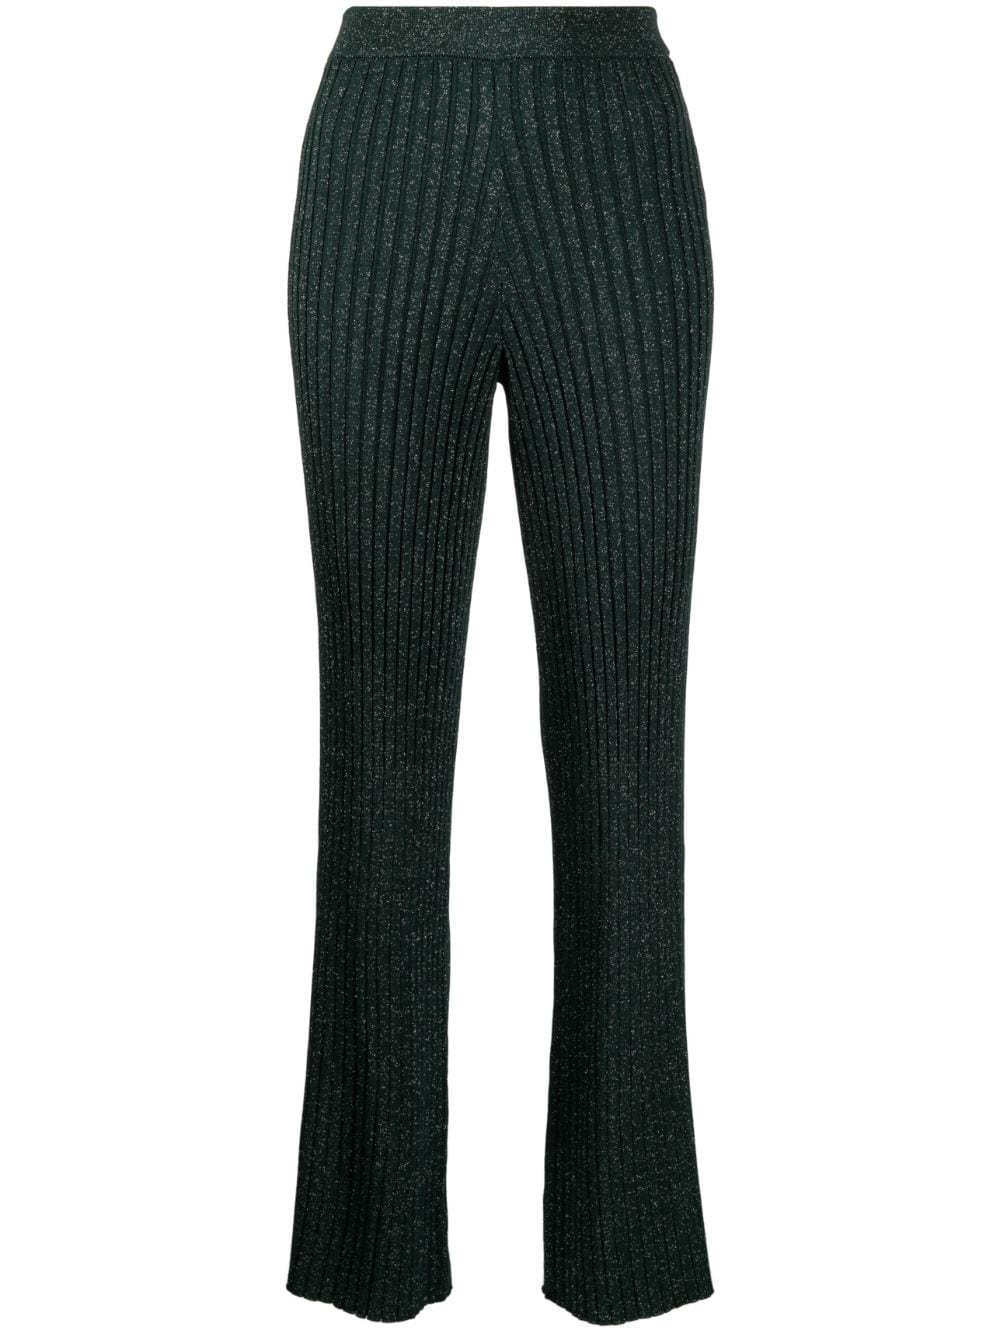 Galvan London Rhea metallic-finish trousers - Green von Galvan London